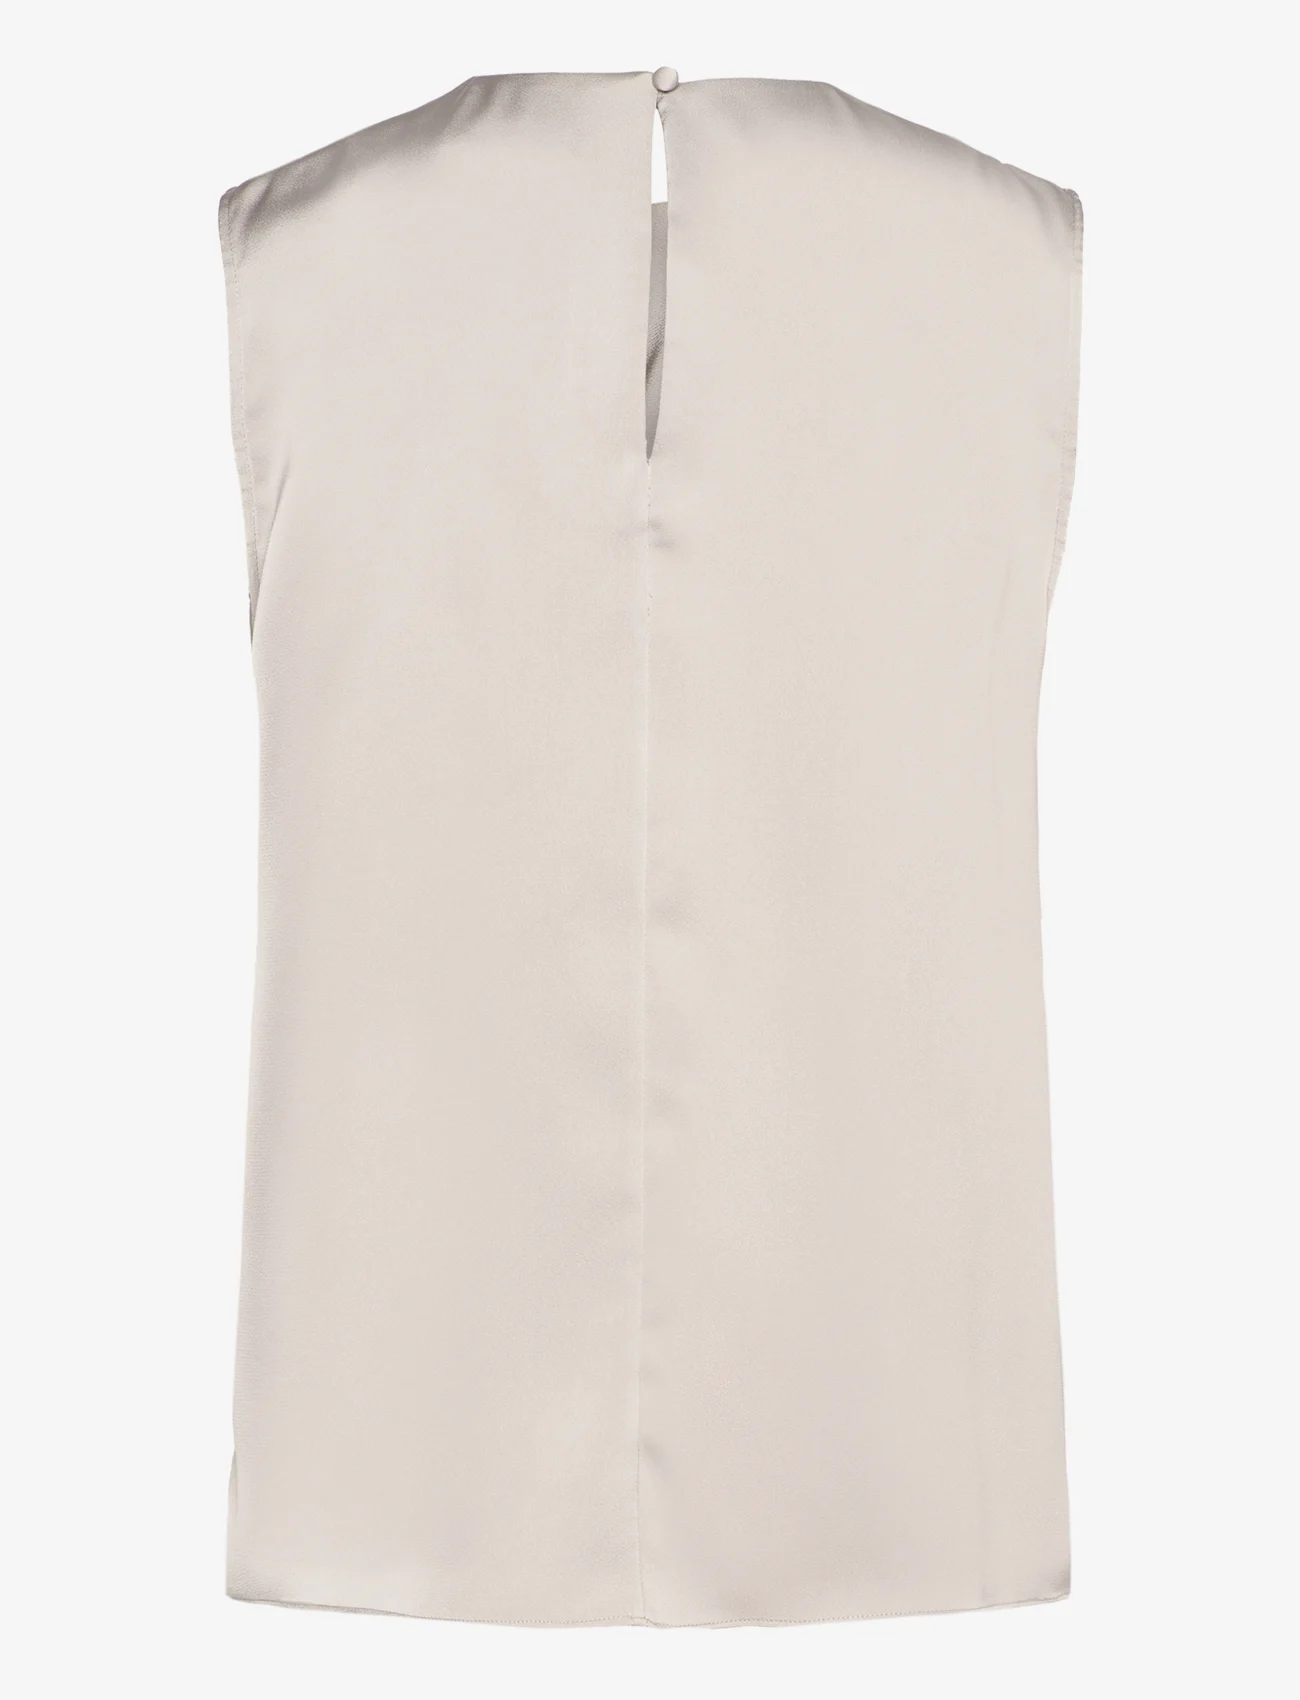 Calvin Klein - SHINY SATIN FLUID NS BLOUSE - sleeveless blouses - sand pebble - 1